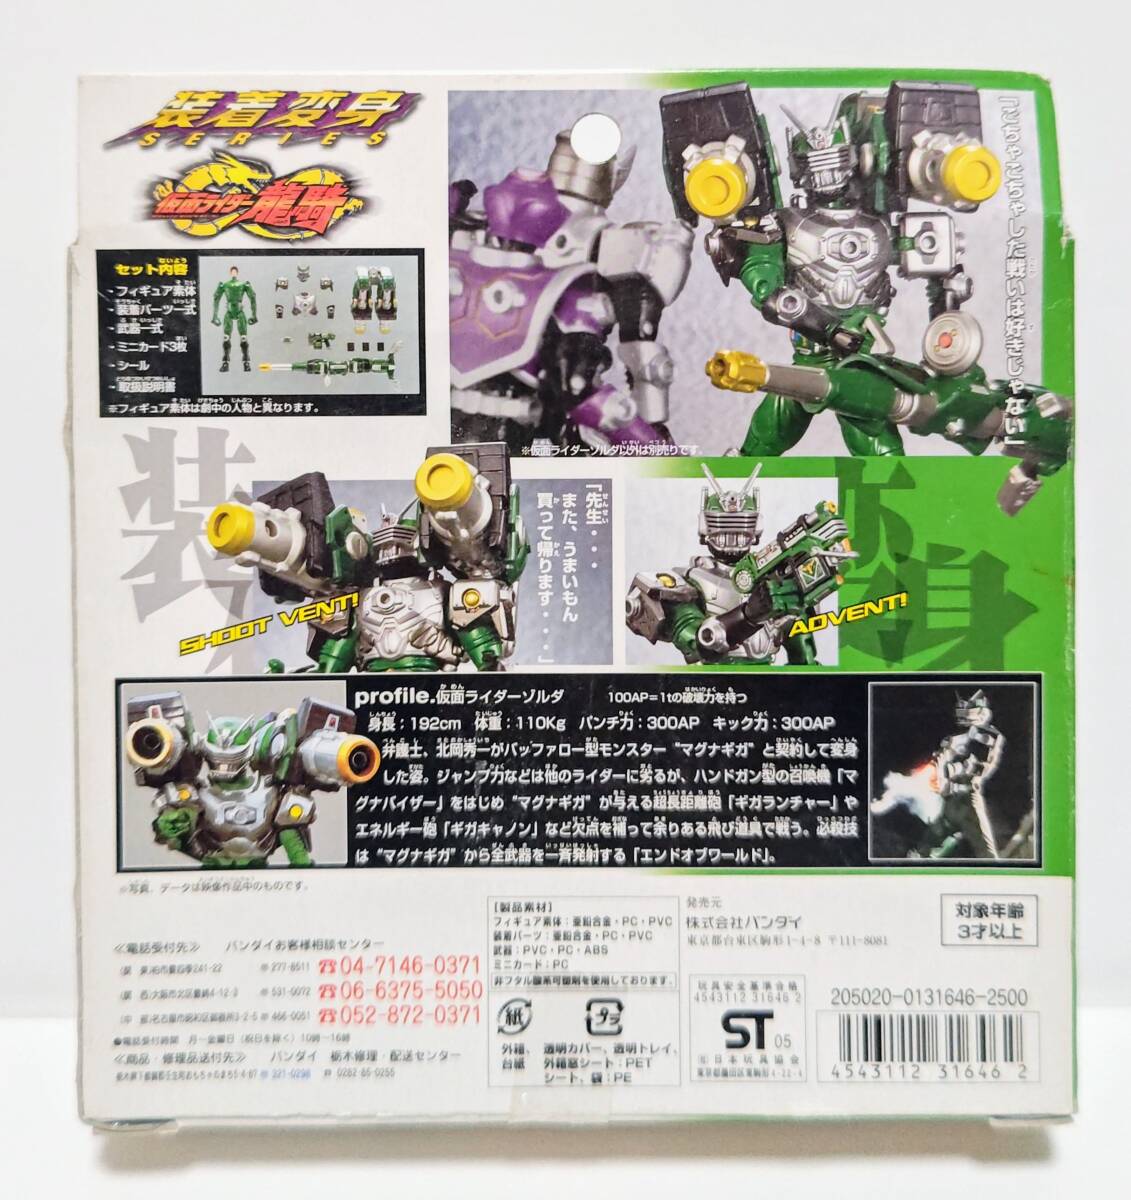  new goods prompt decision Chogokin GD-80 installation metamorphosis Kamen Rider zoruda unopened Bandai 2005 year Kamen Rider Dragon Knight figure 